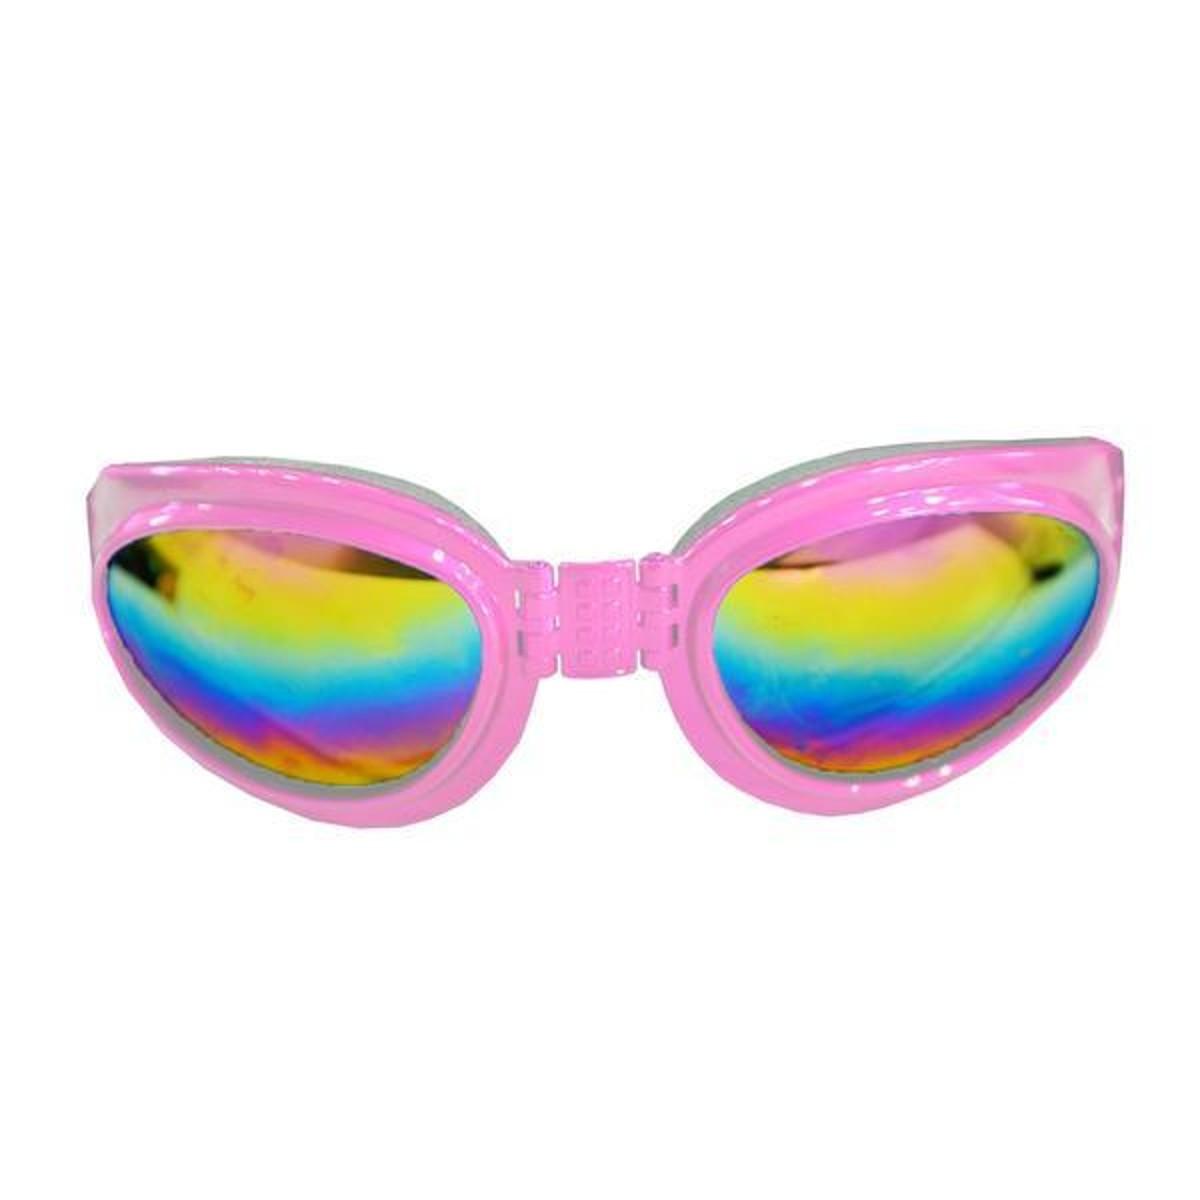 K9 Sport Shades Dog Goggles - Pink